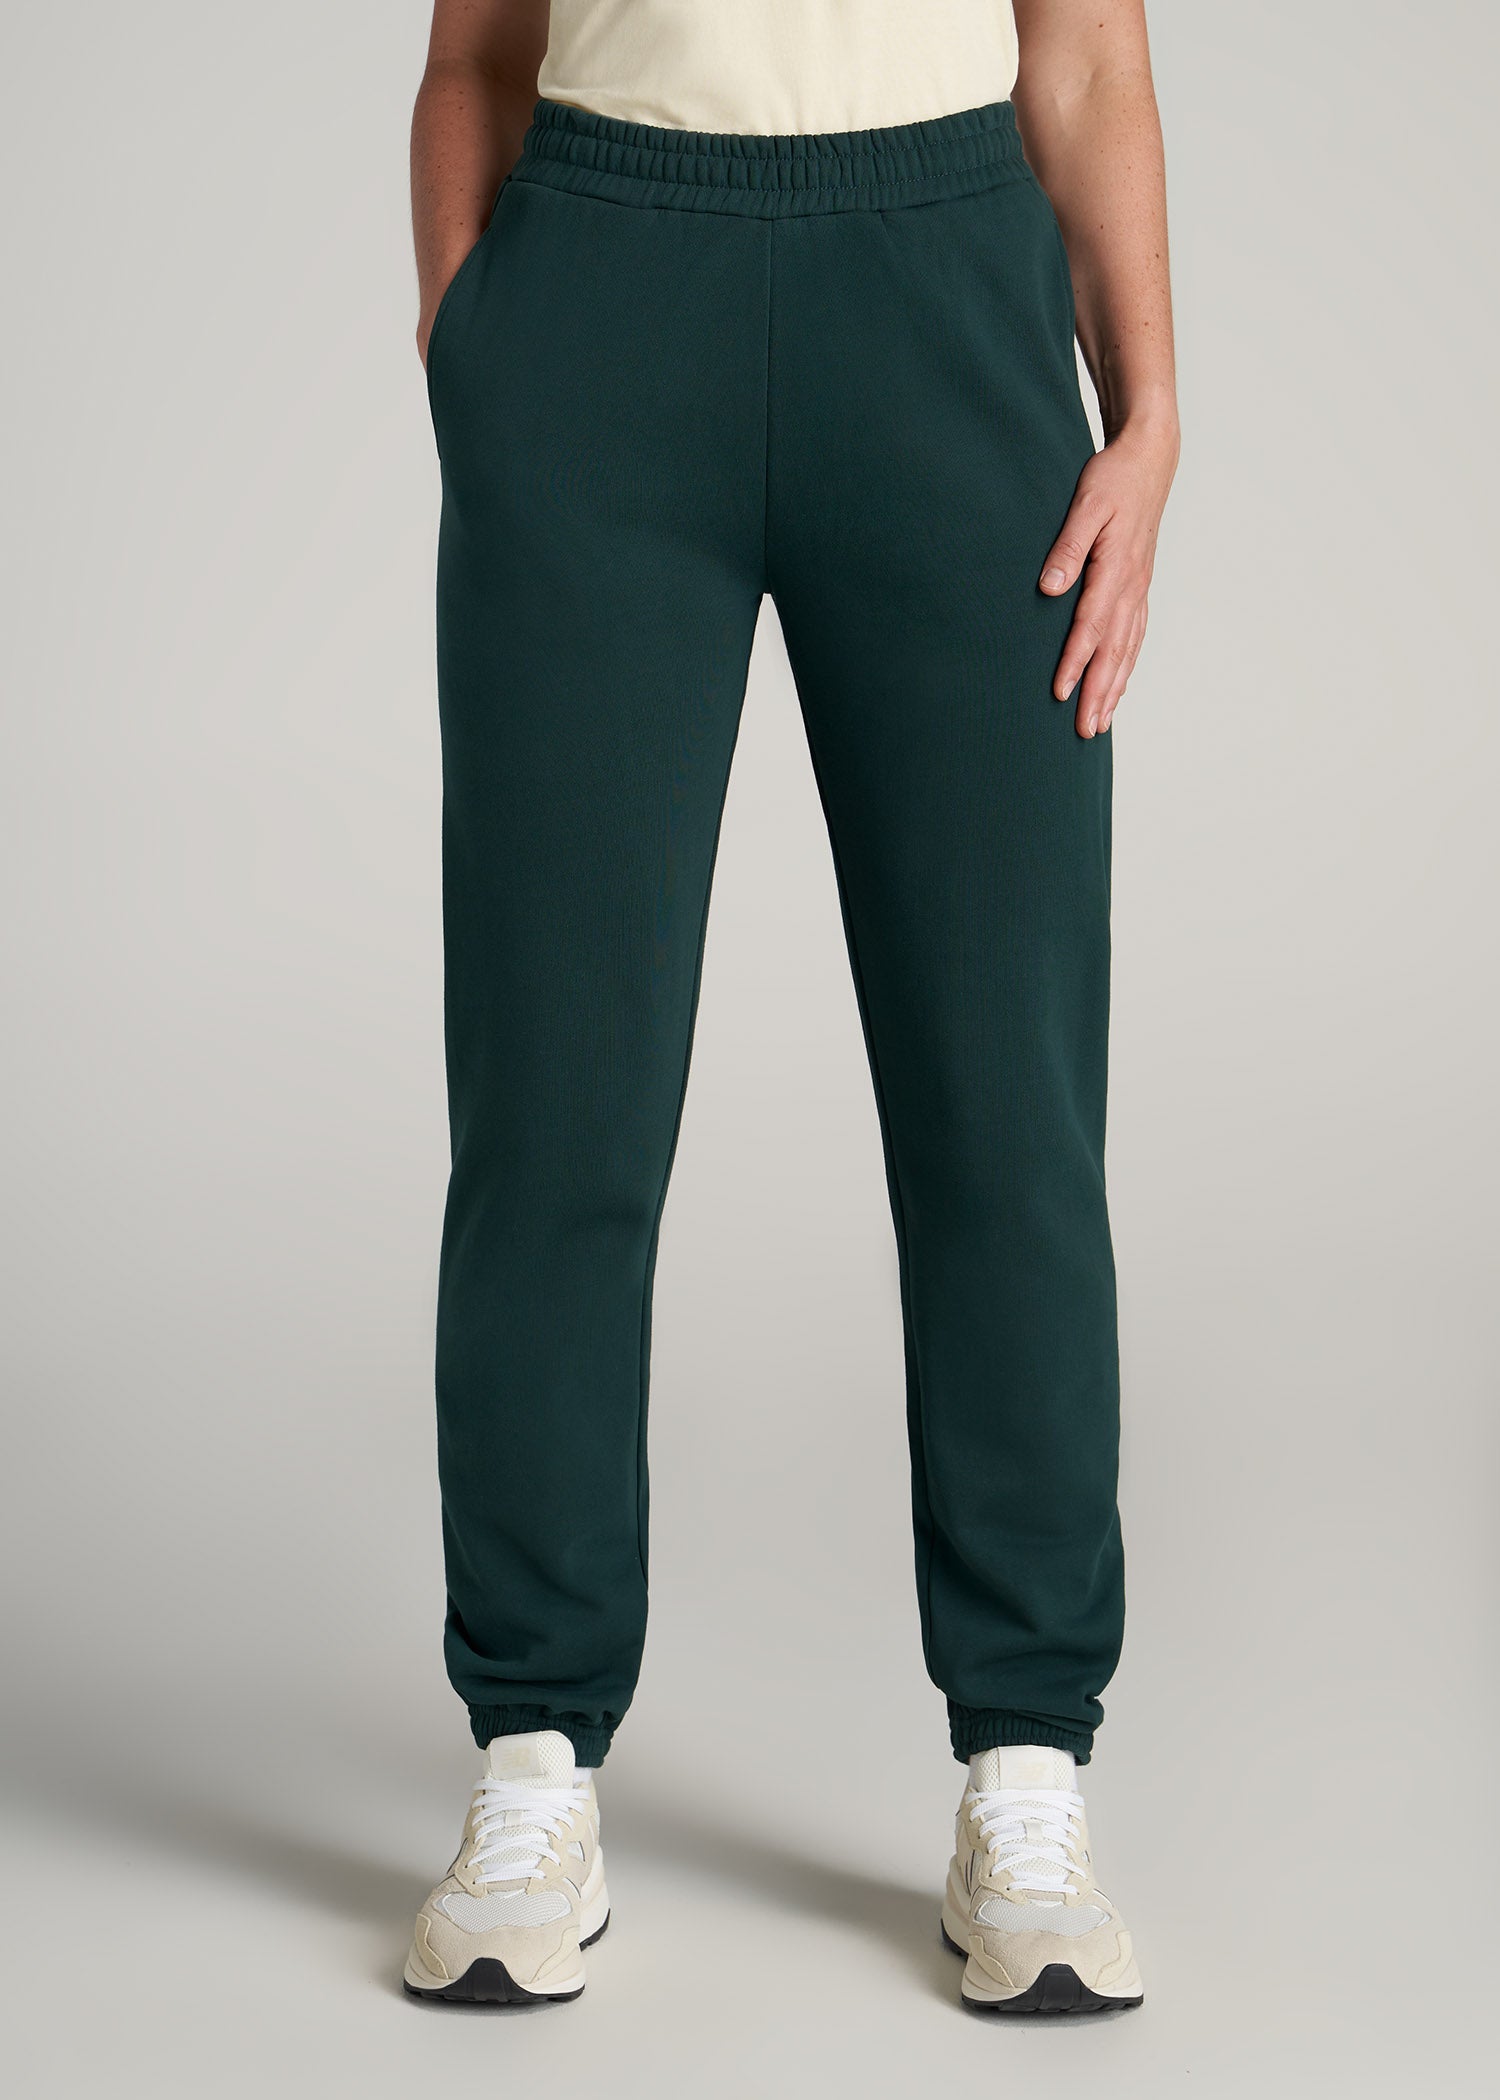 Wearever Fleece Relaxed Women's Tall Sweatpants Emerald – American Tall